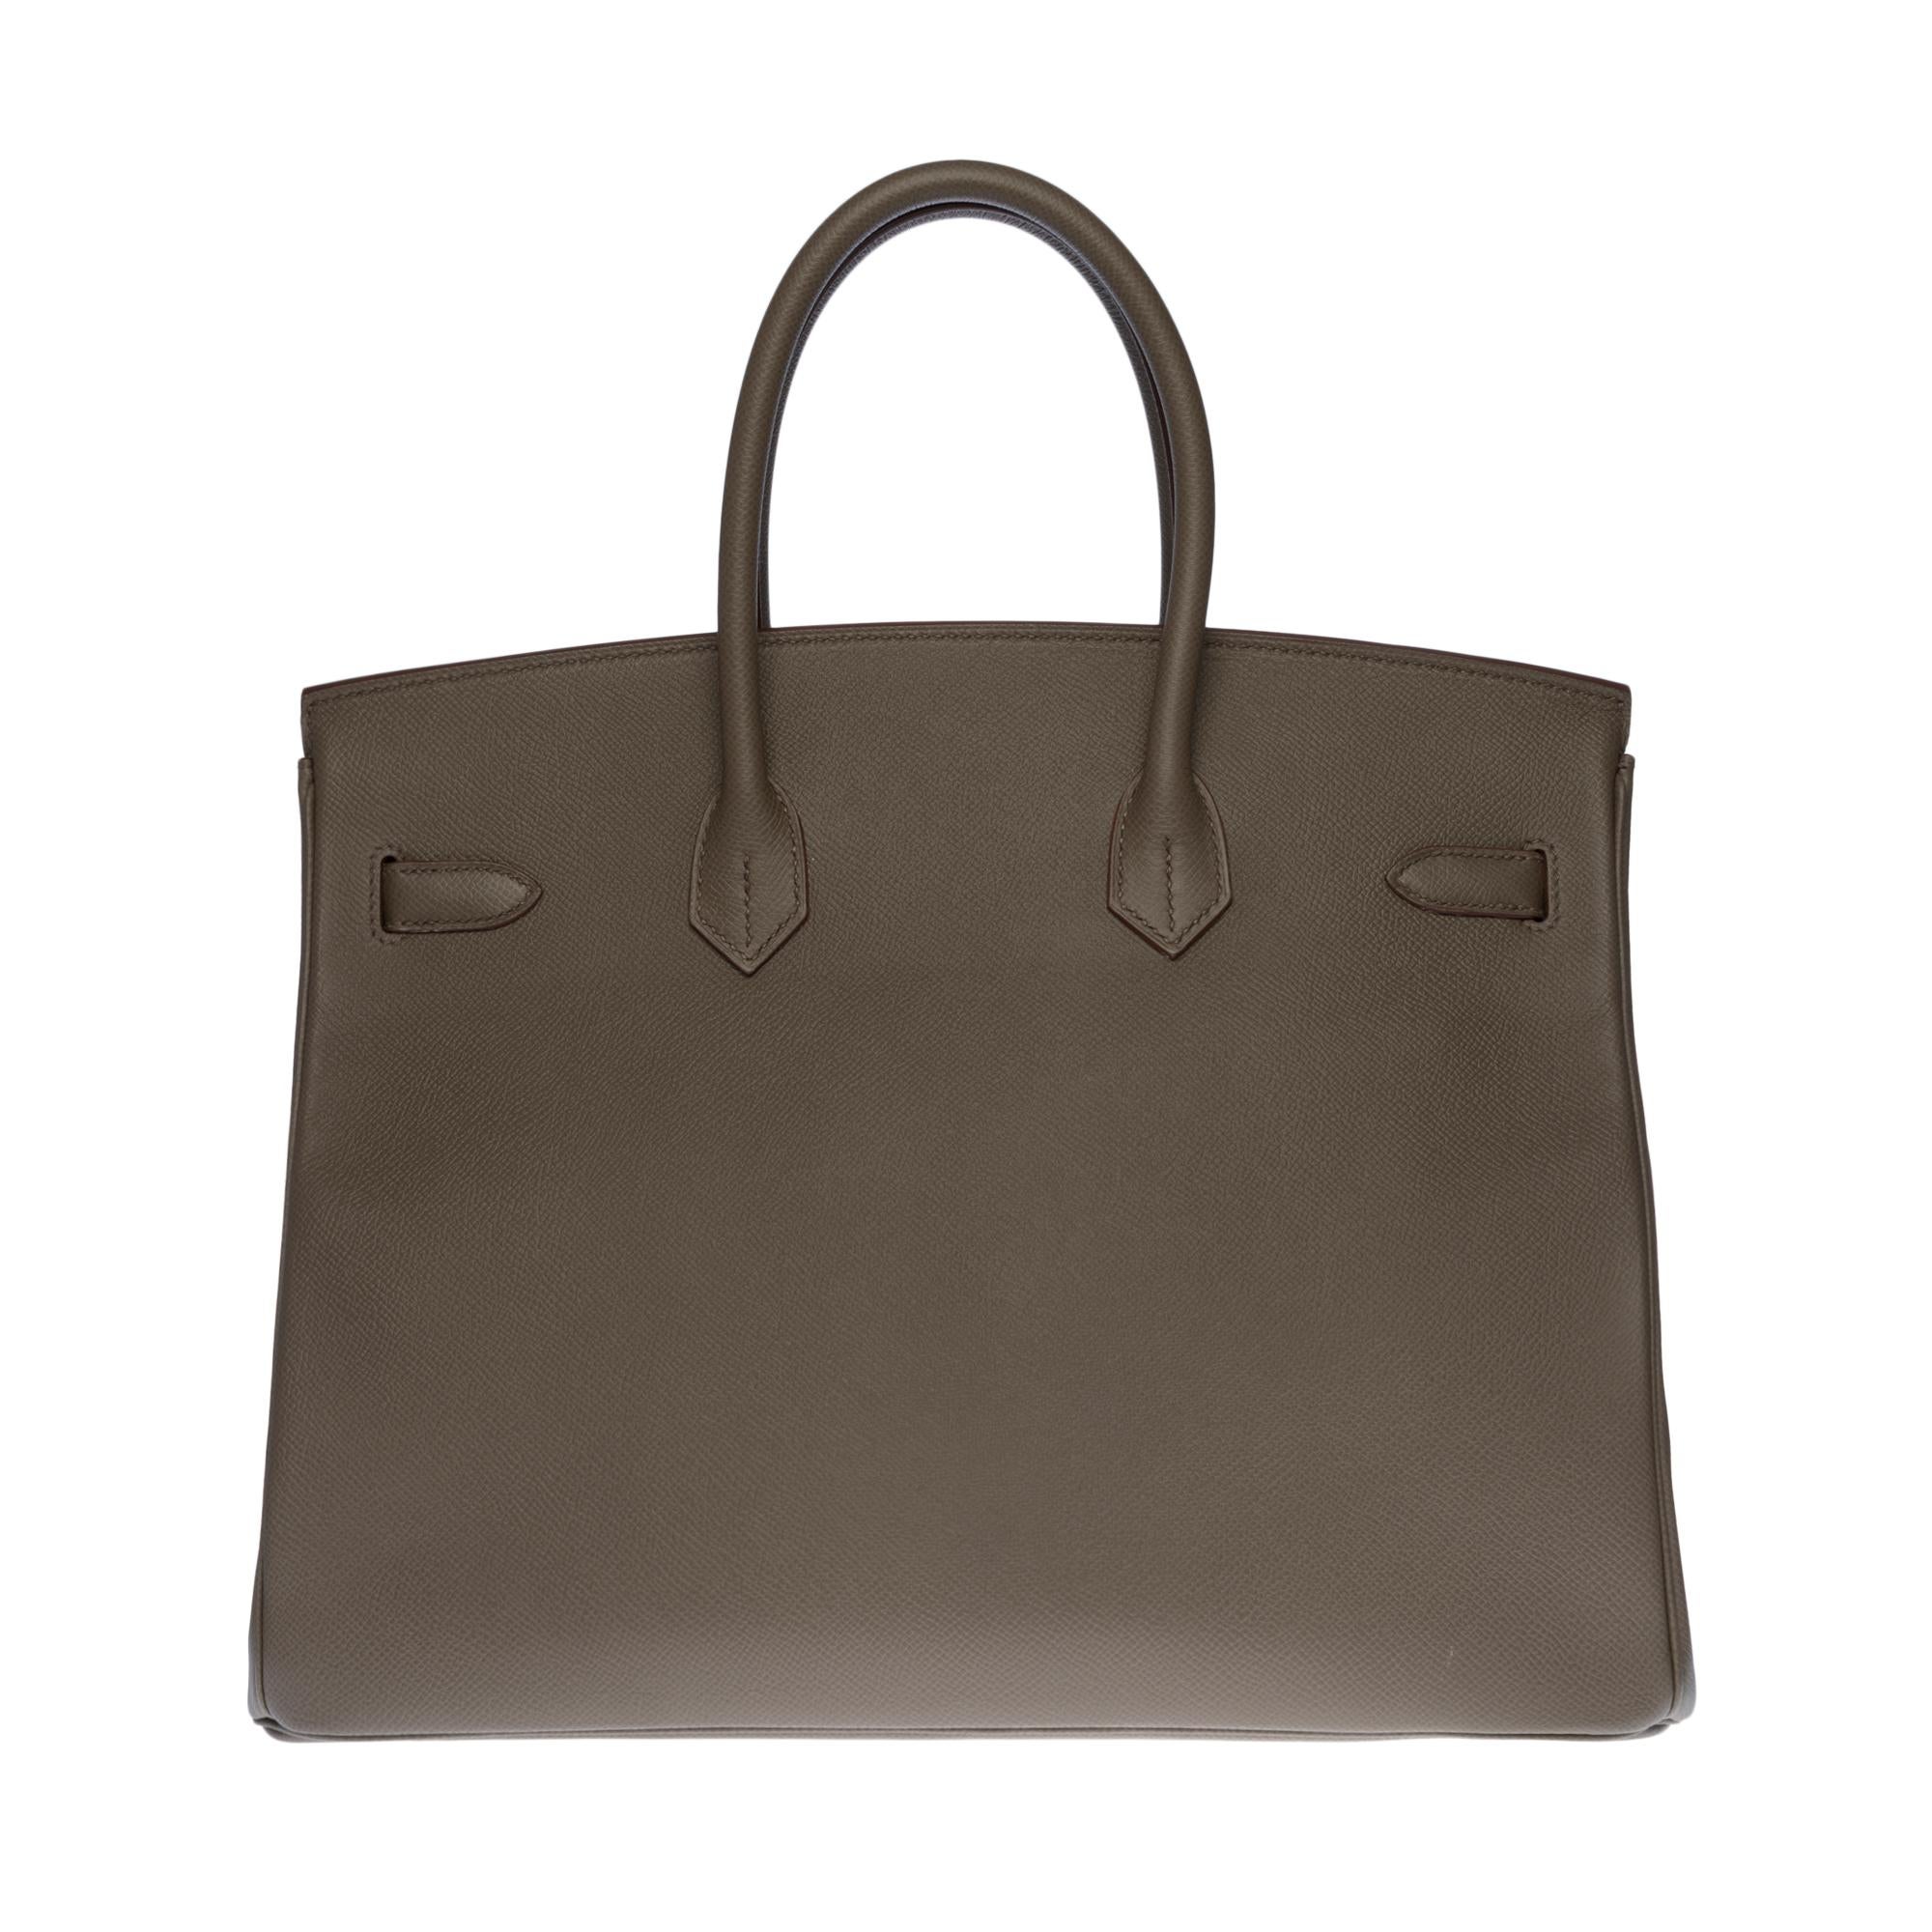 Brand New -Full set-Hermès Birkin 35 handbag in Etain Epsom leather ...